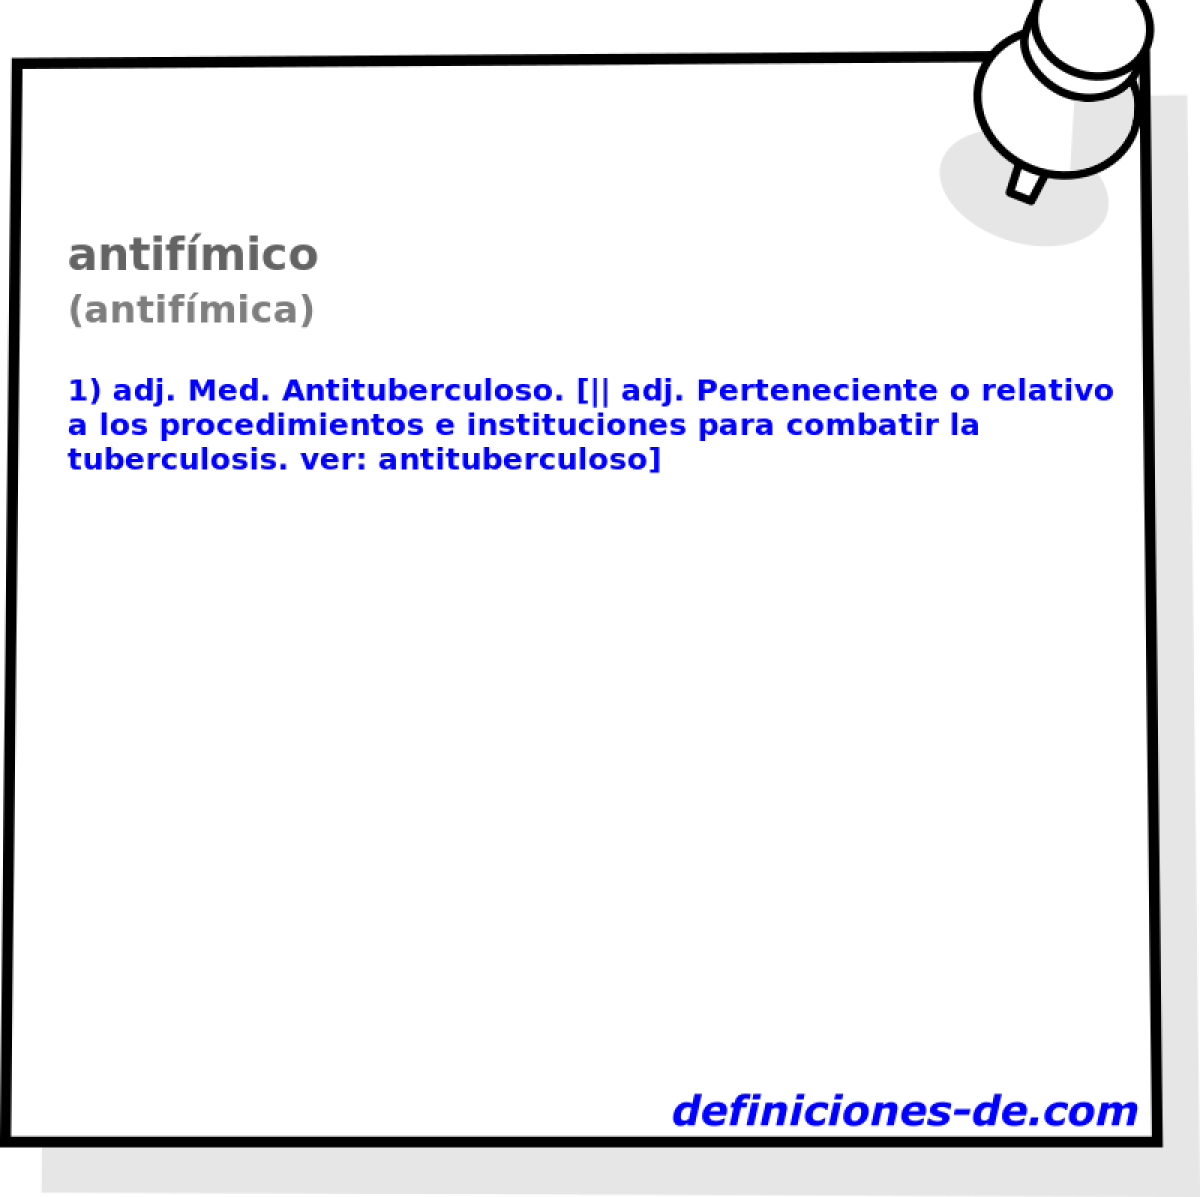 antifmico (antifmica)